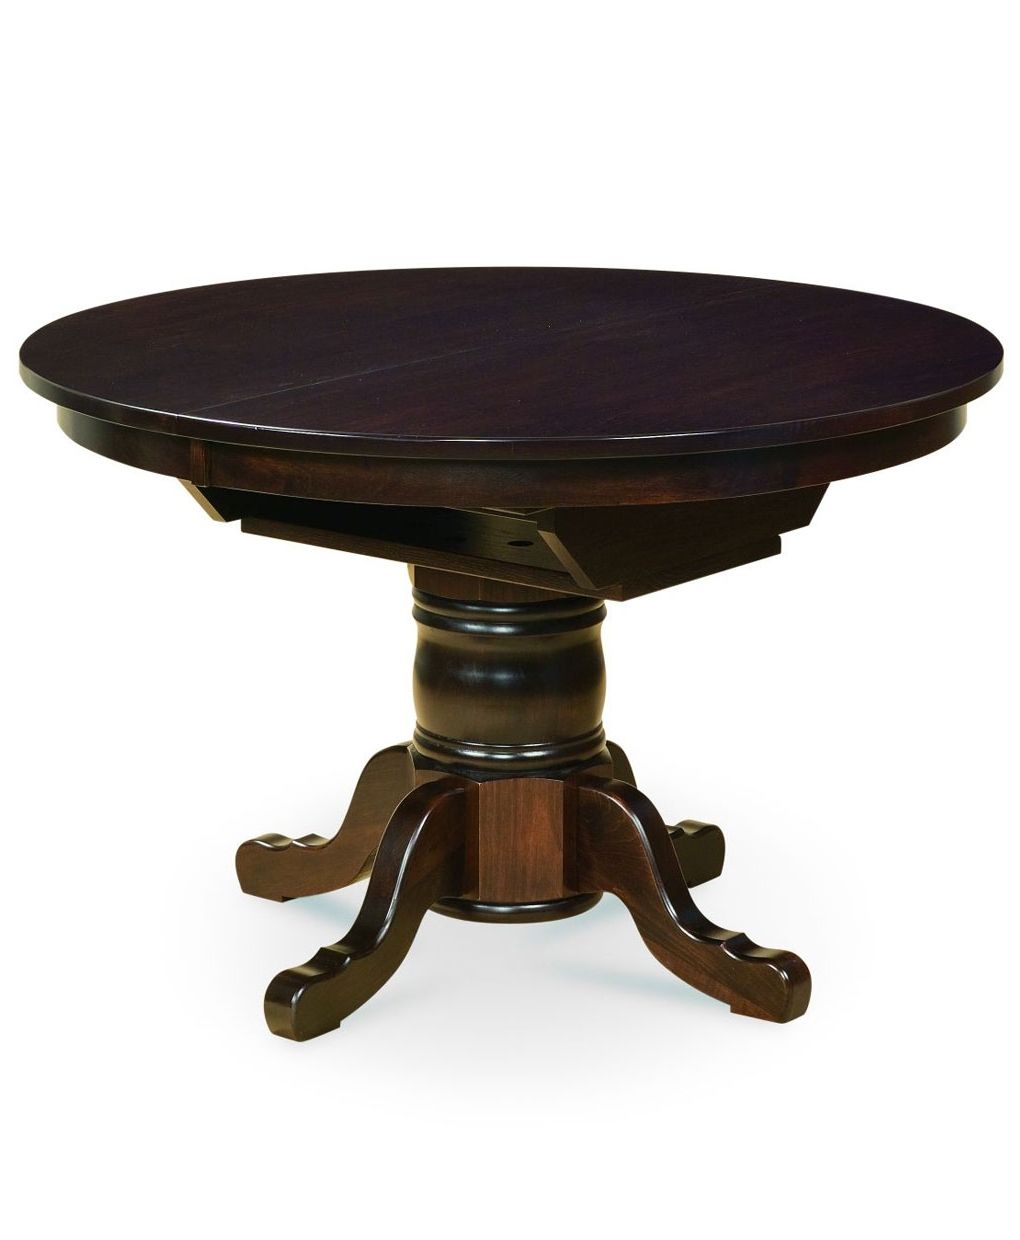 Most Popular Marbella Dining Tables Pertaining To Marbella Dining Table – Amish Direct Furniture (View 5 of 25)